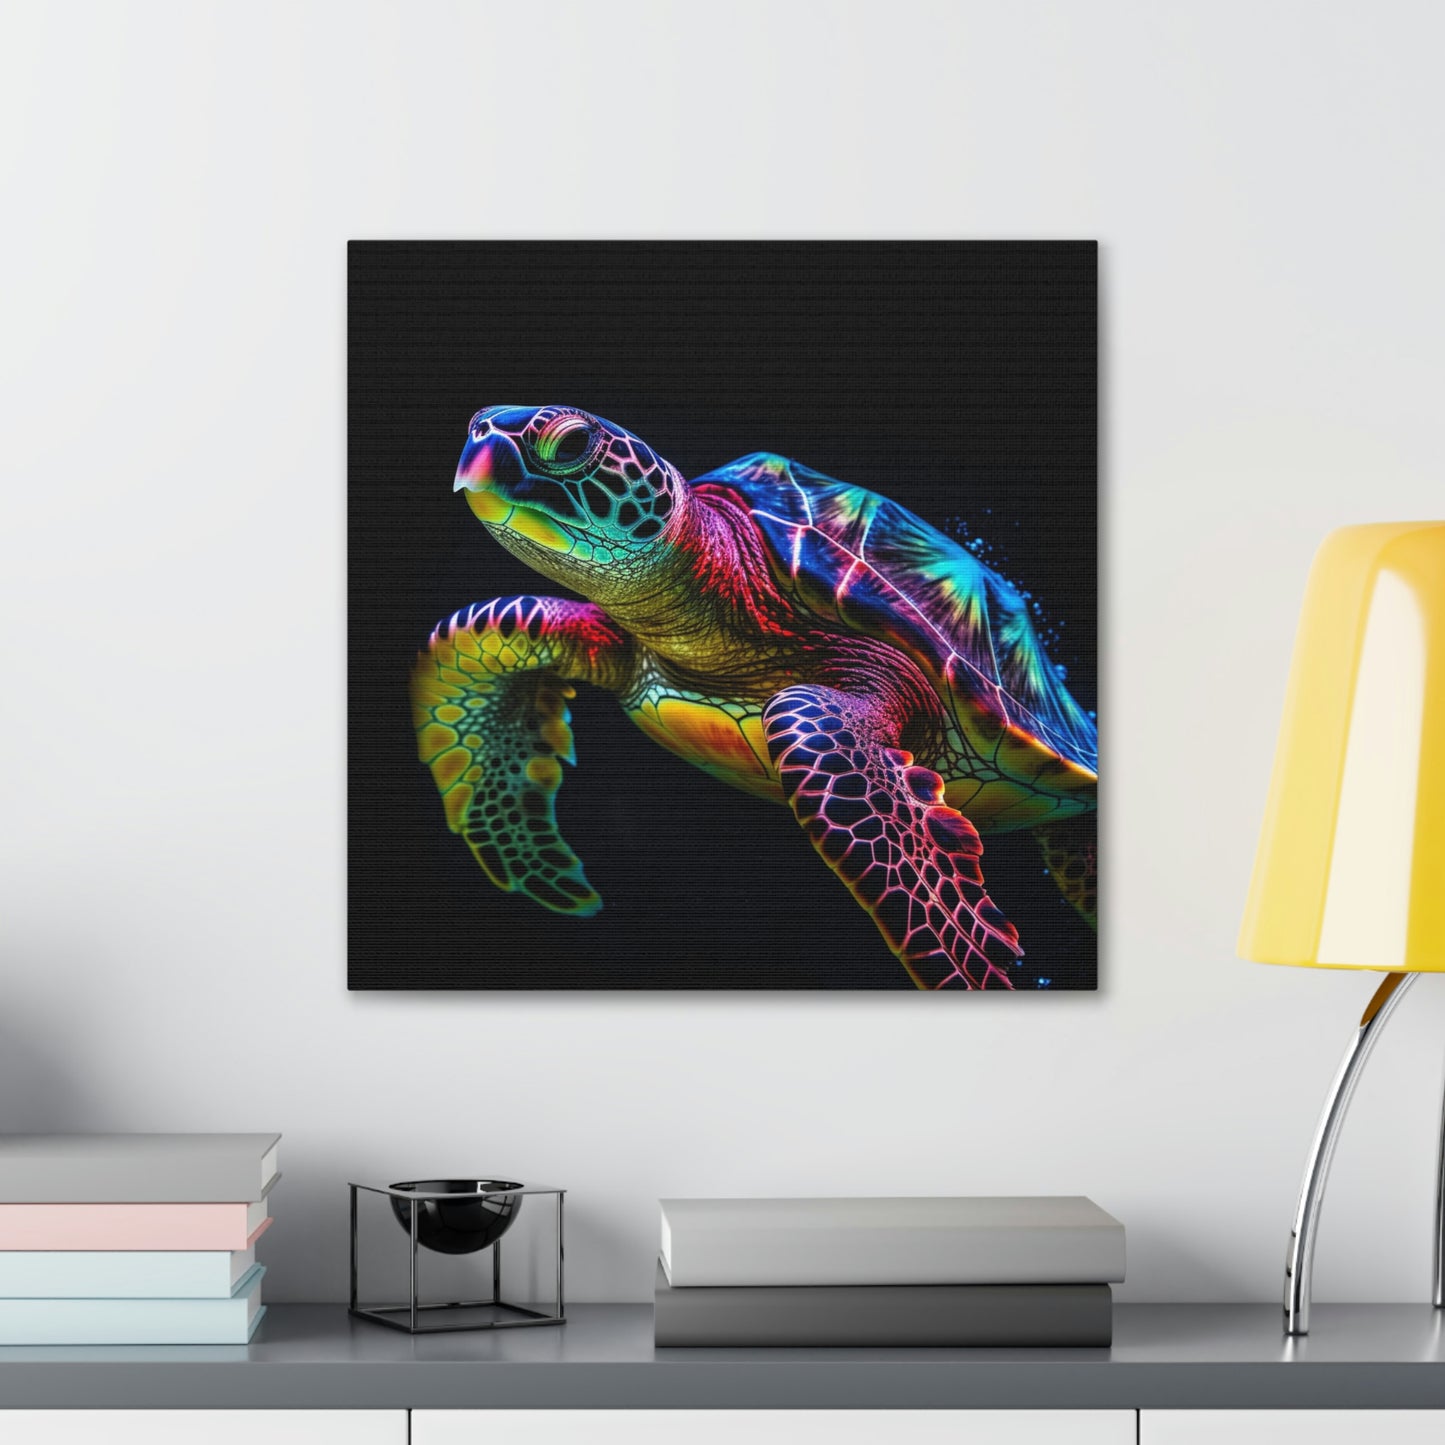 Canvas Gallery Wraps Neon Sea Turtle 2